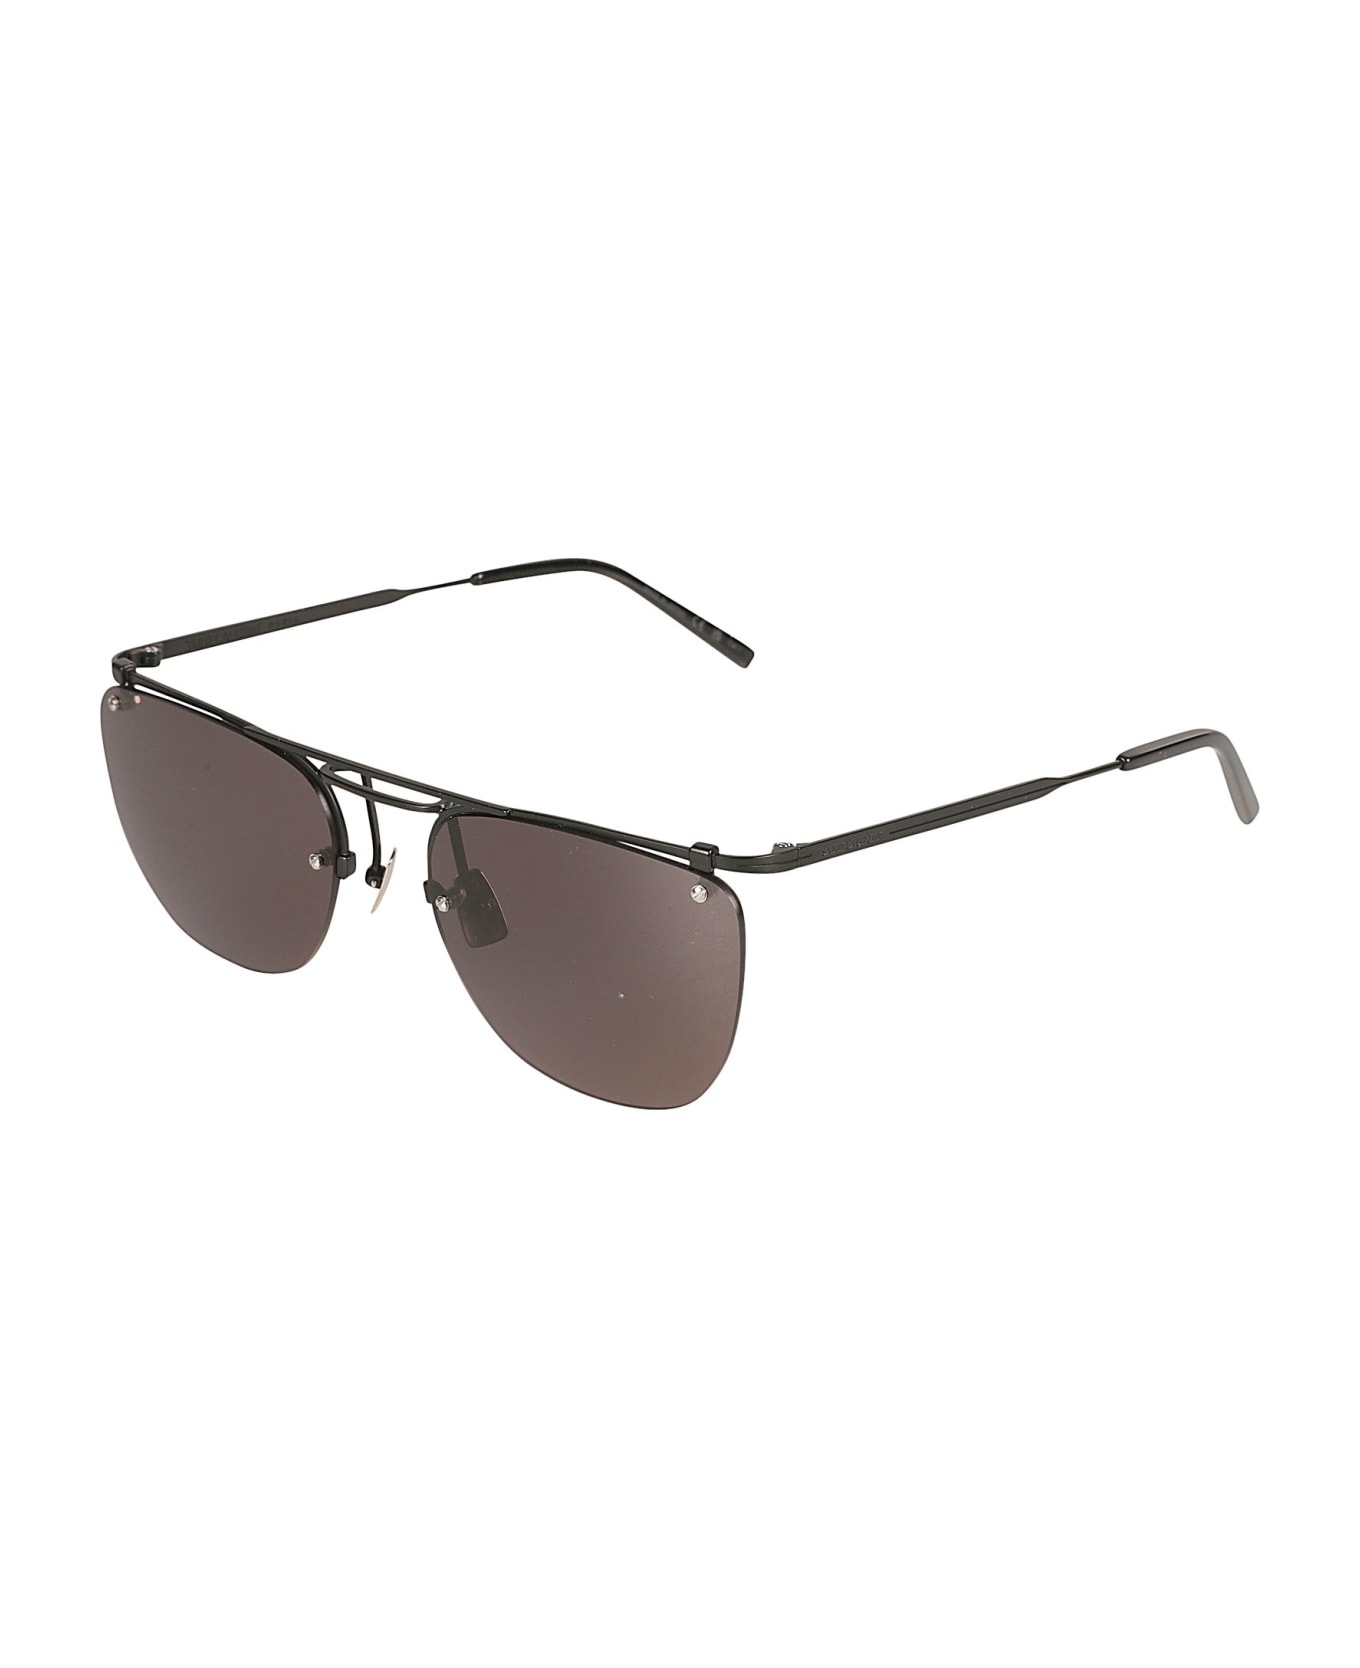 Straight Top Bar Oval Lens Sunglasses - 2